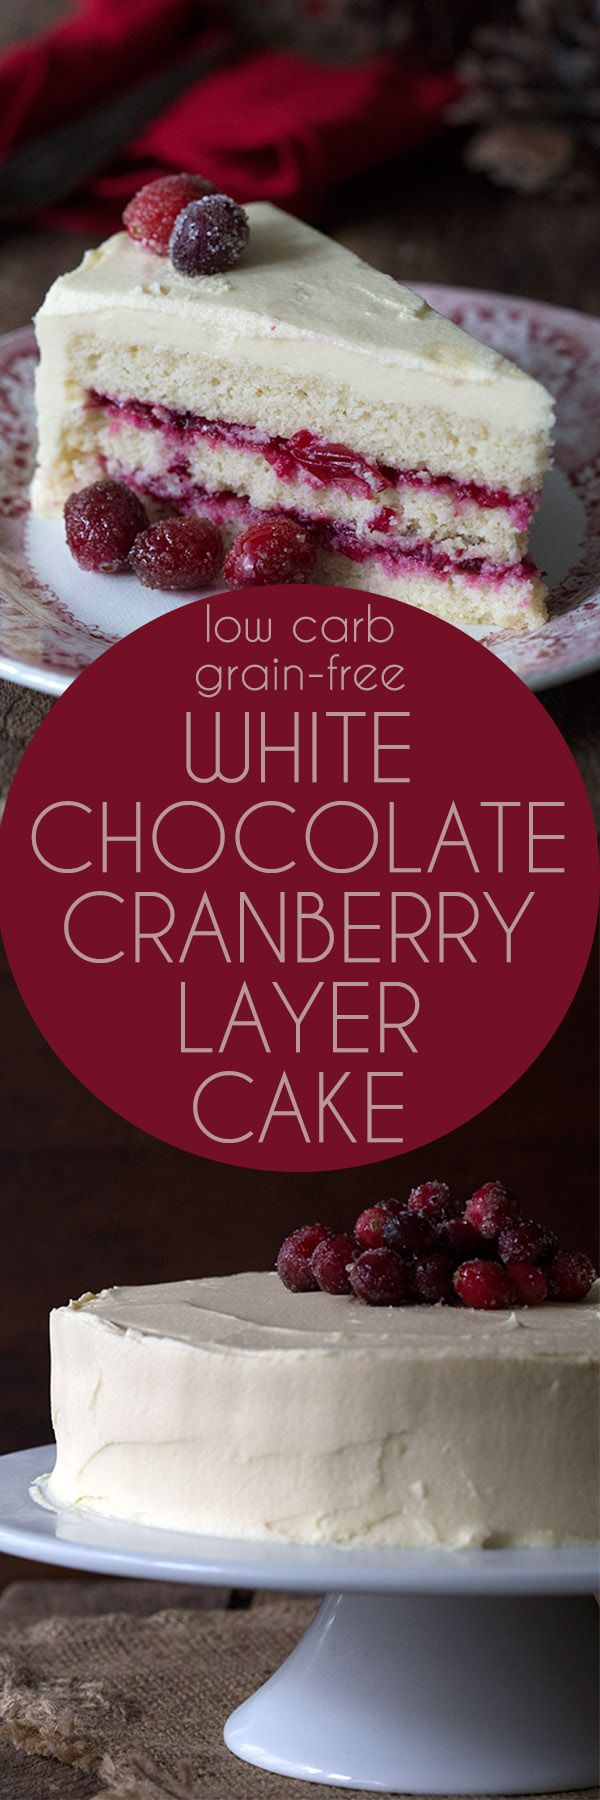 Cranberry White Chocolate Layer Cake